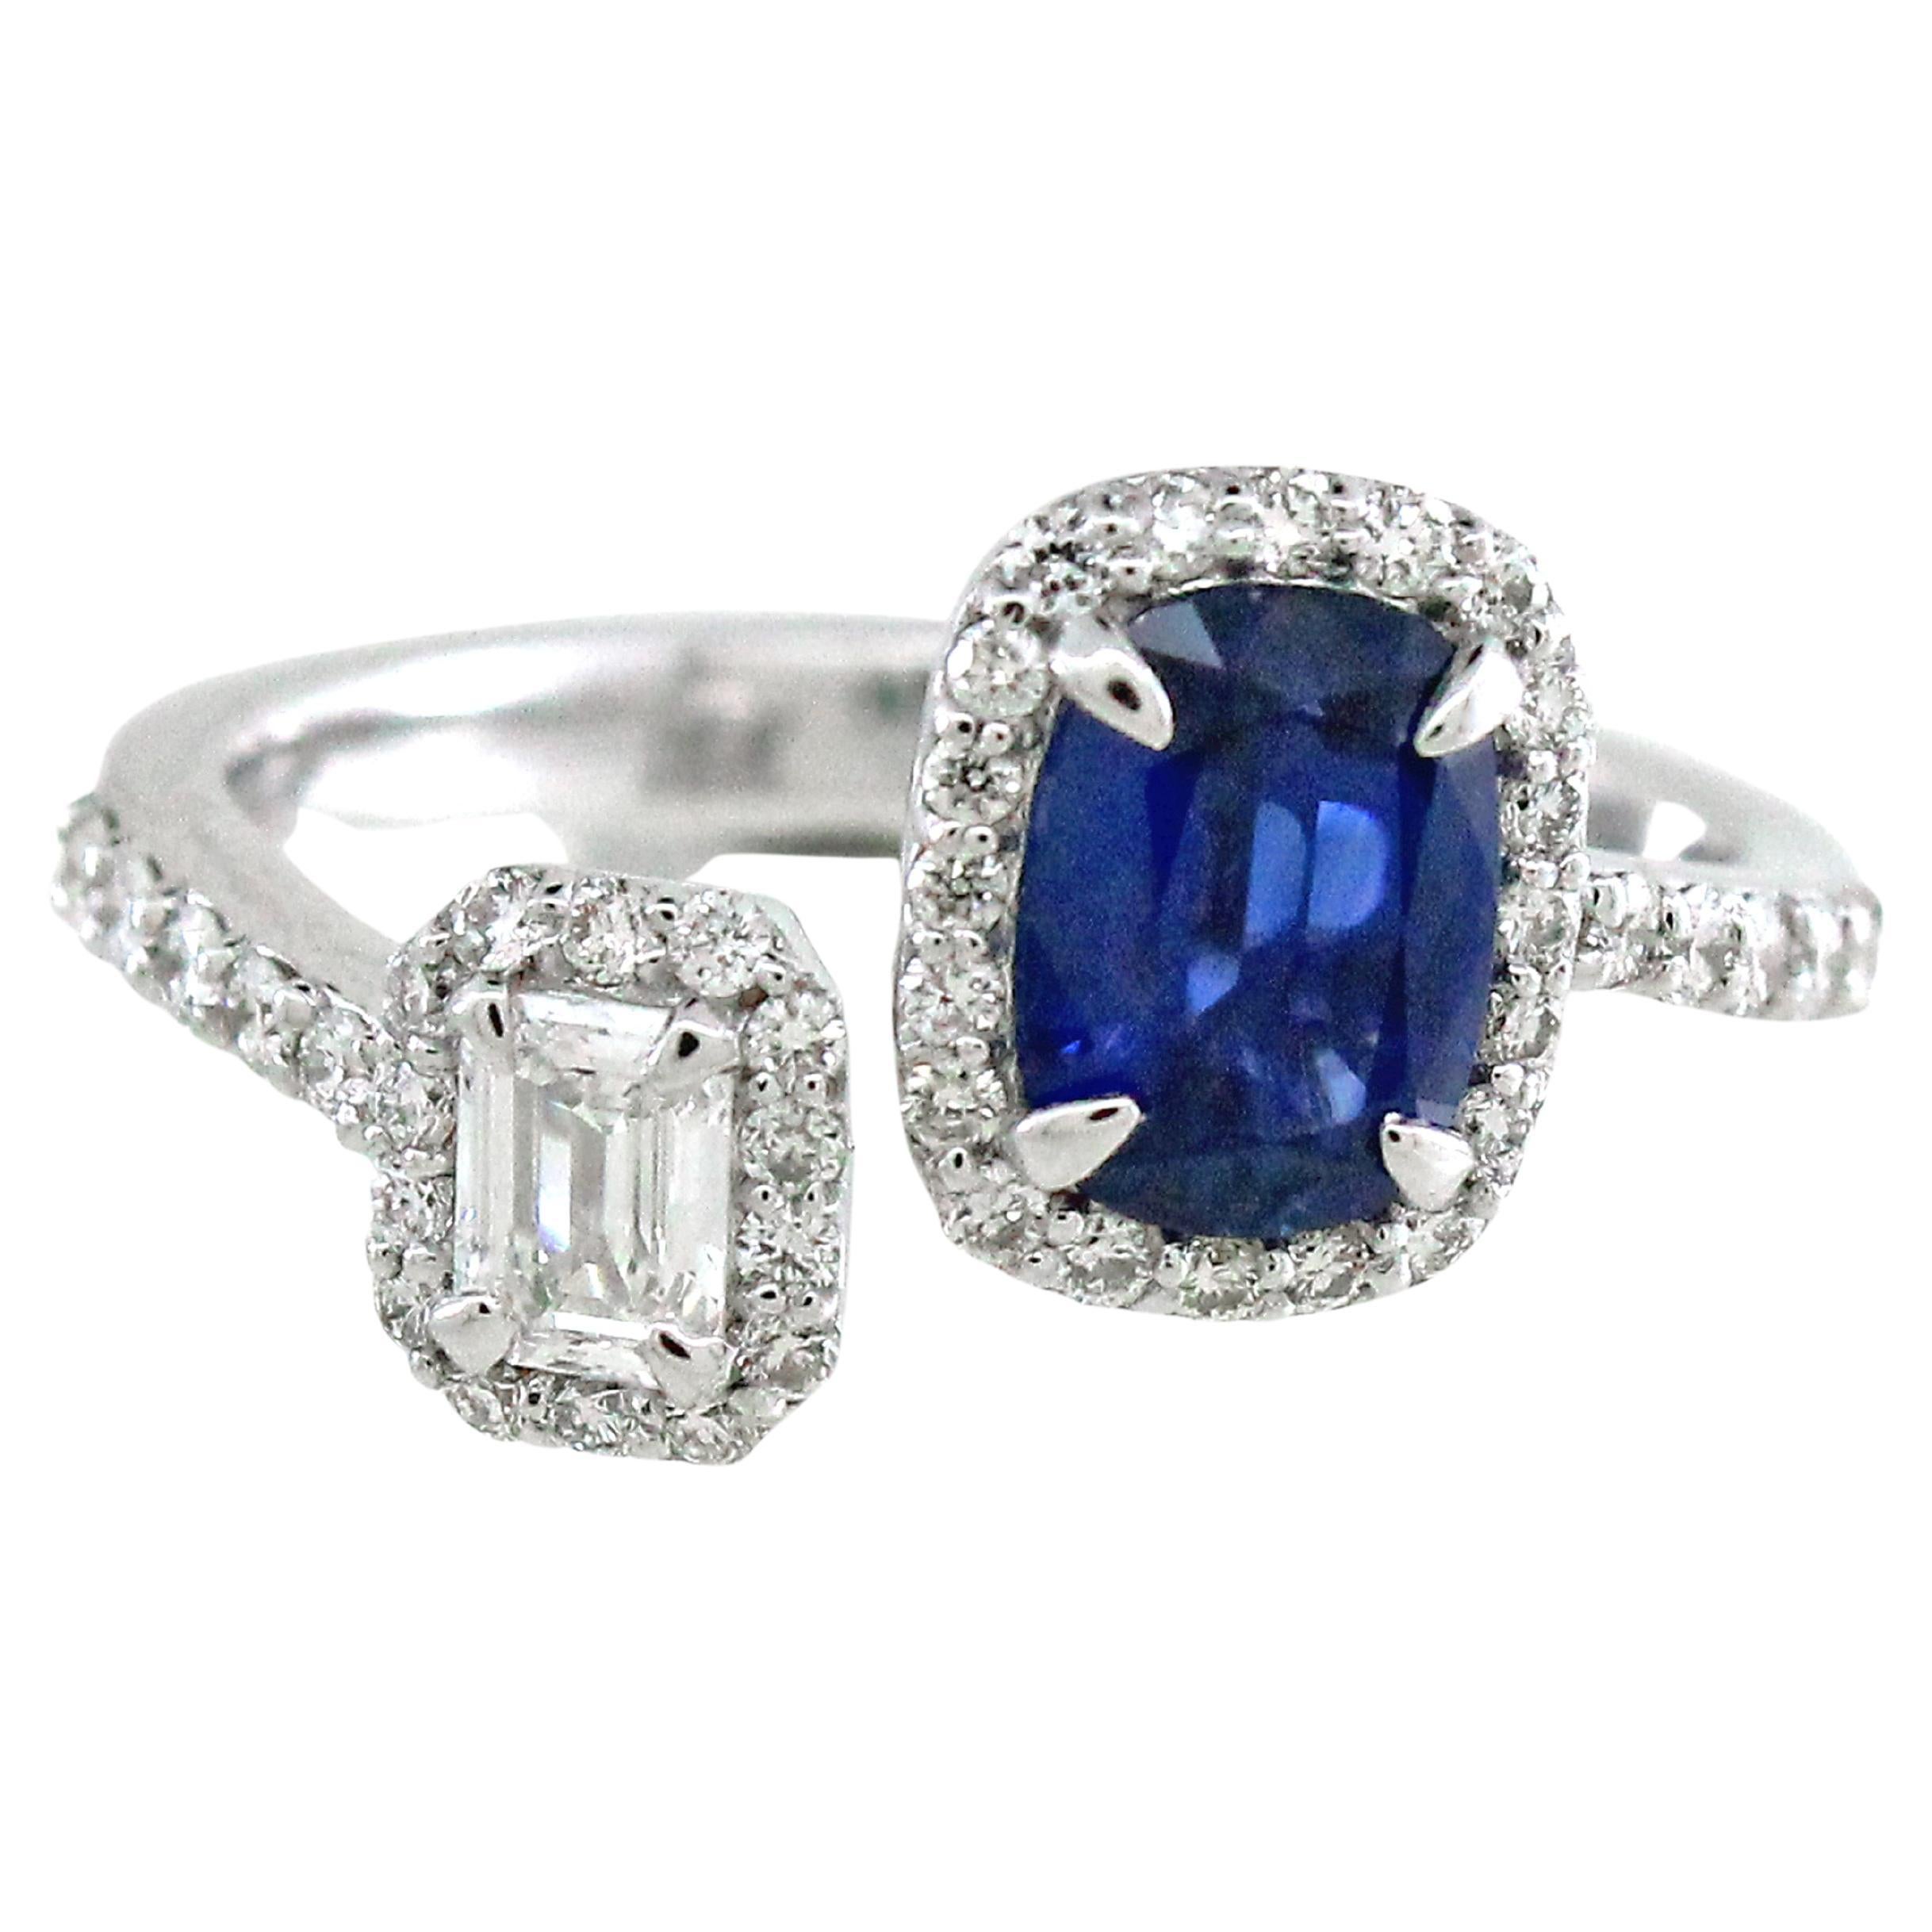 1 Carat Blue Sapphire Toi-et-moi Ring